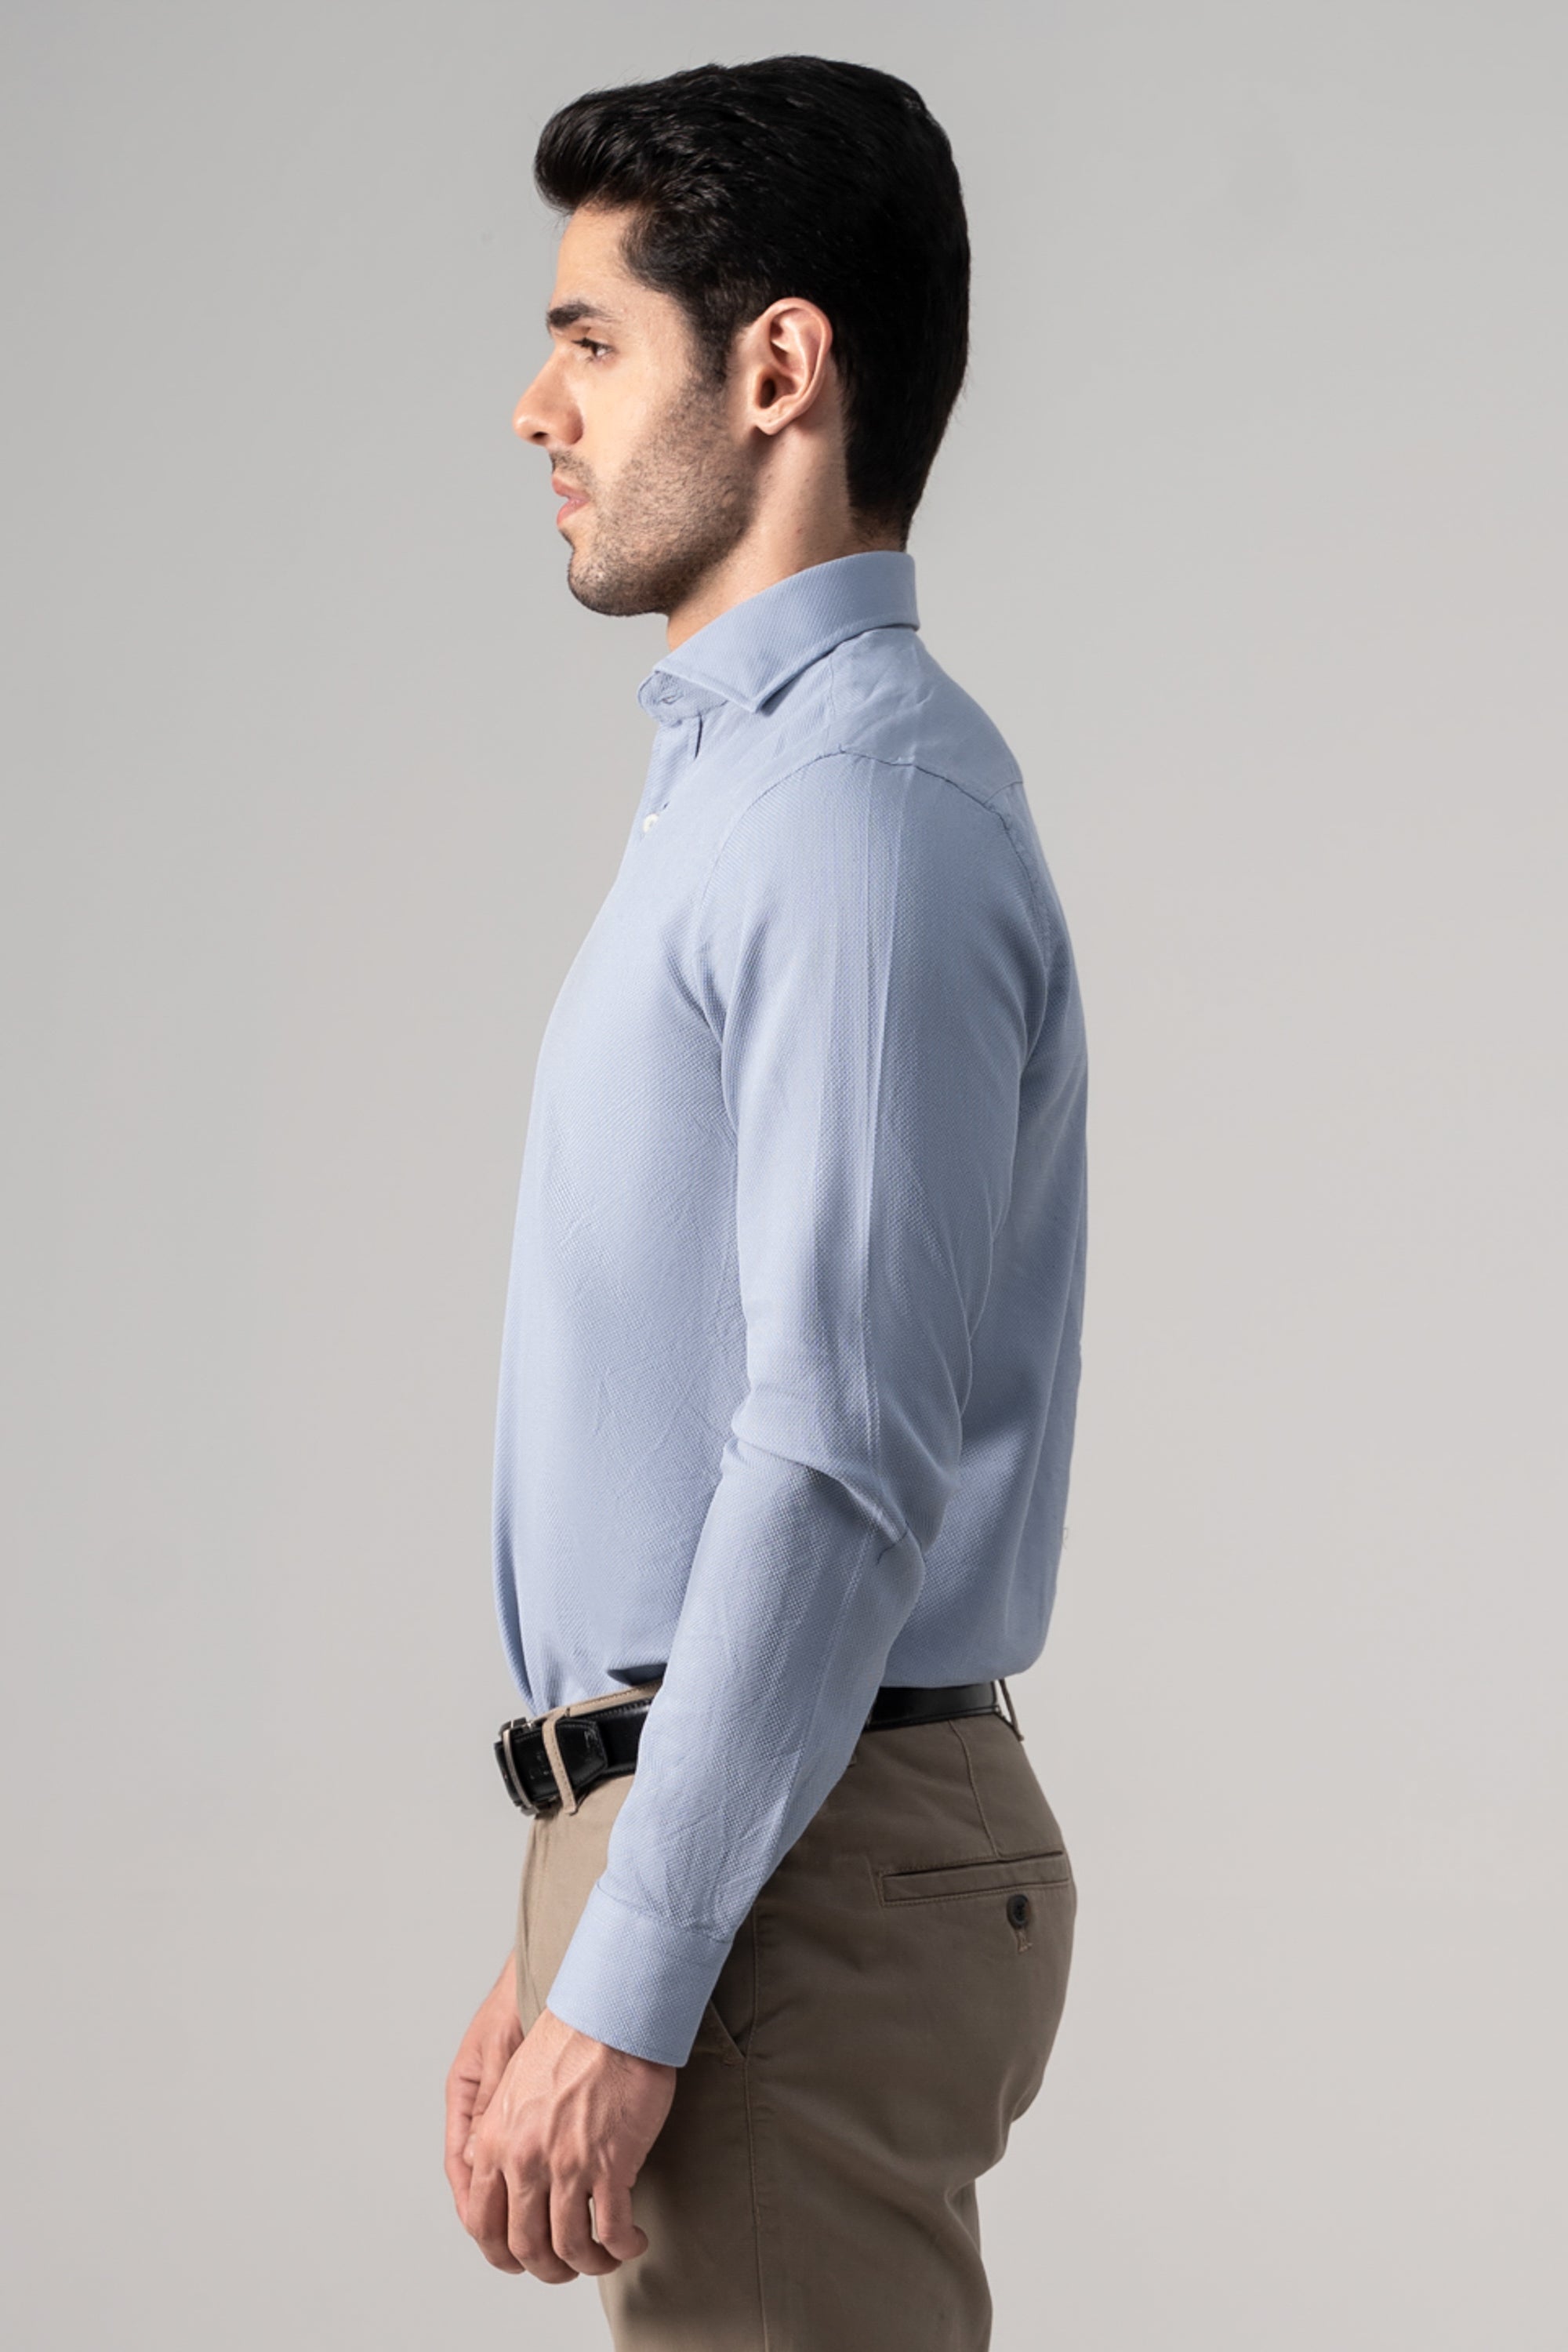 Dressing Light Blue Shirt Gray Pants Stock Photo 178300418 | Shutterstock